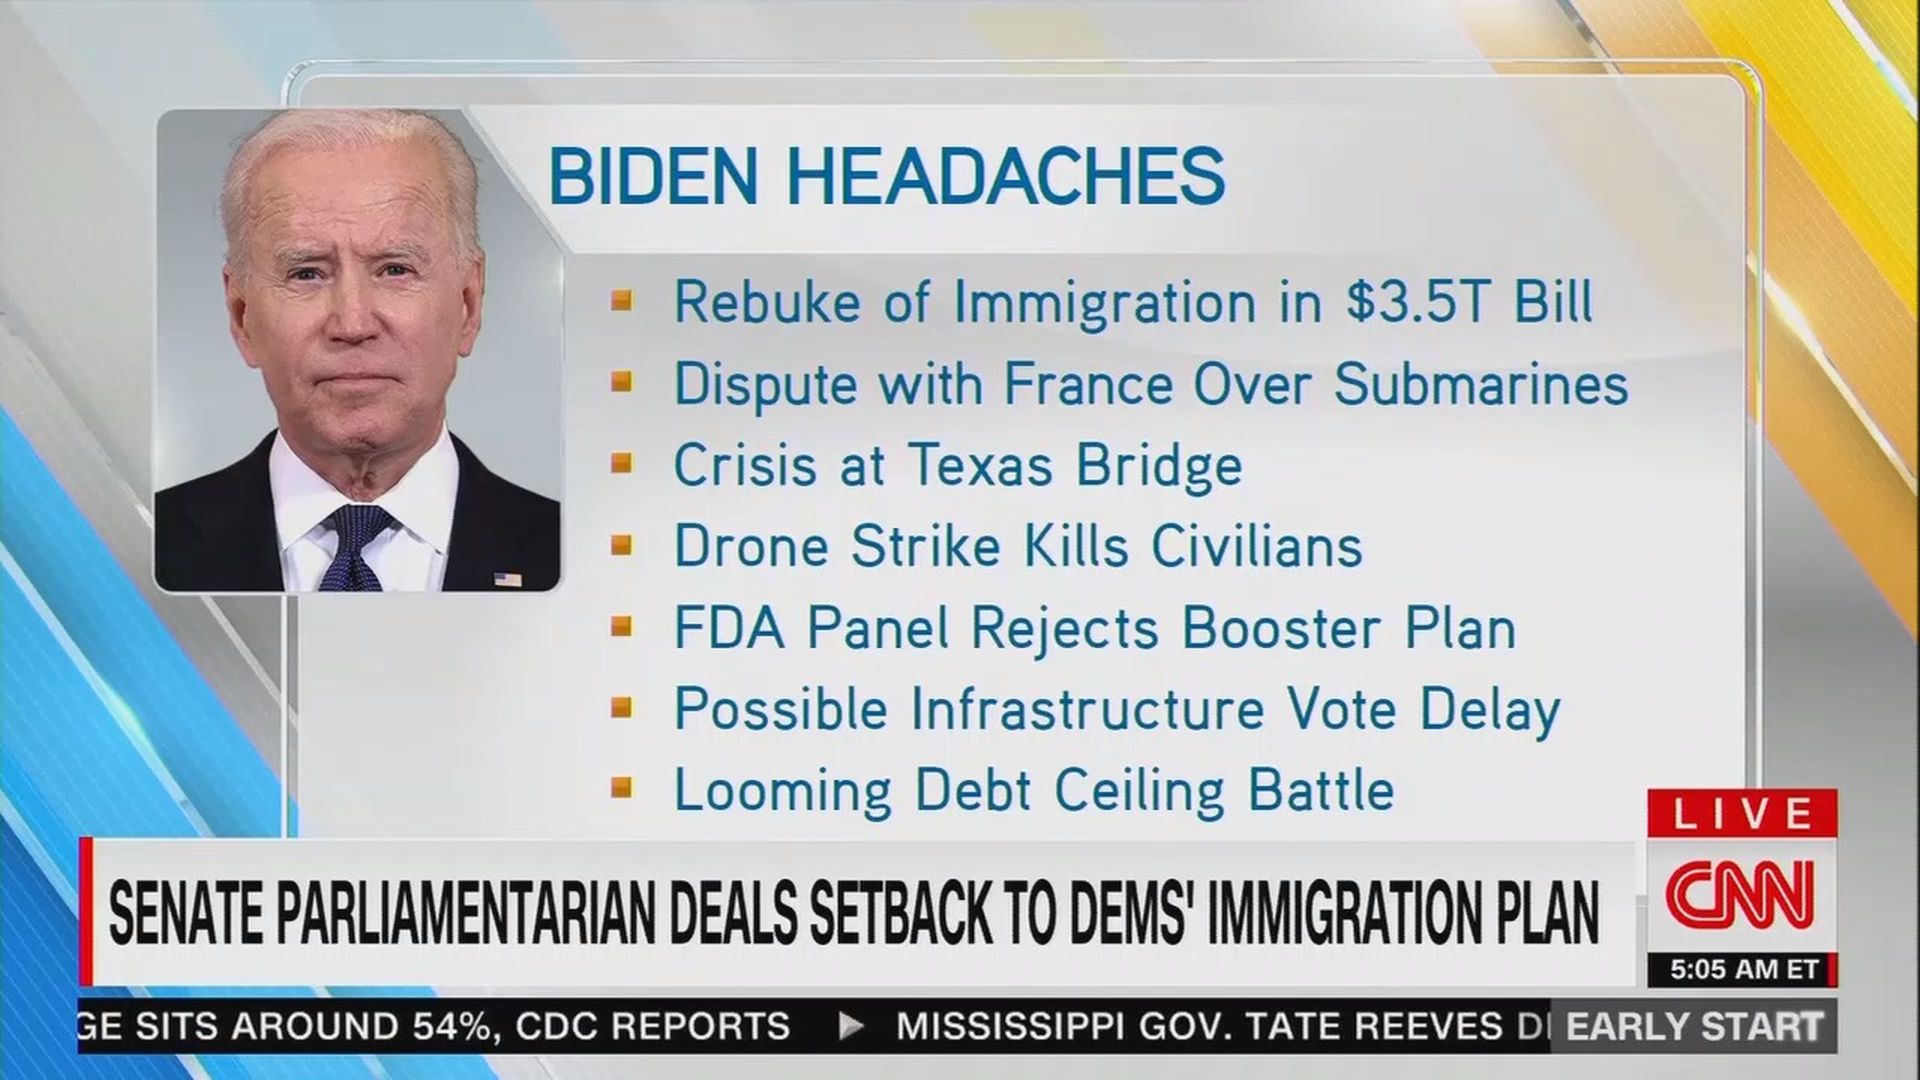 List of Biden's headaches